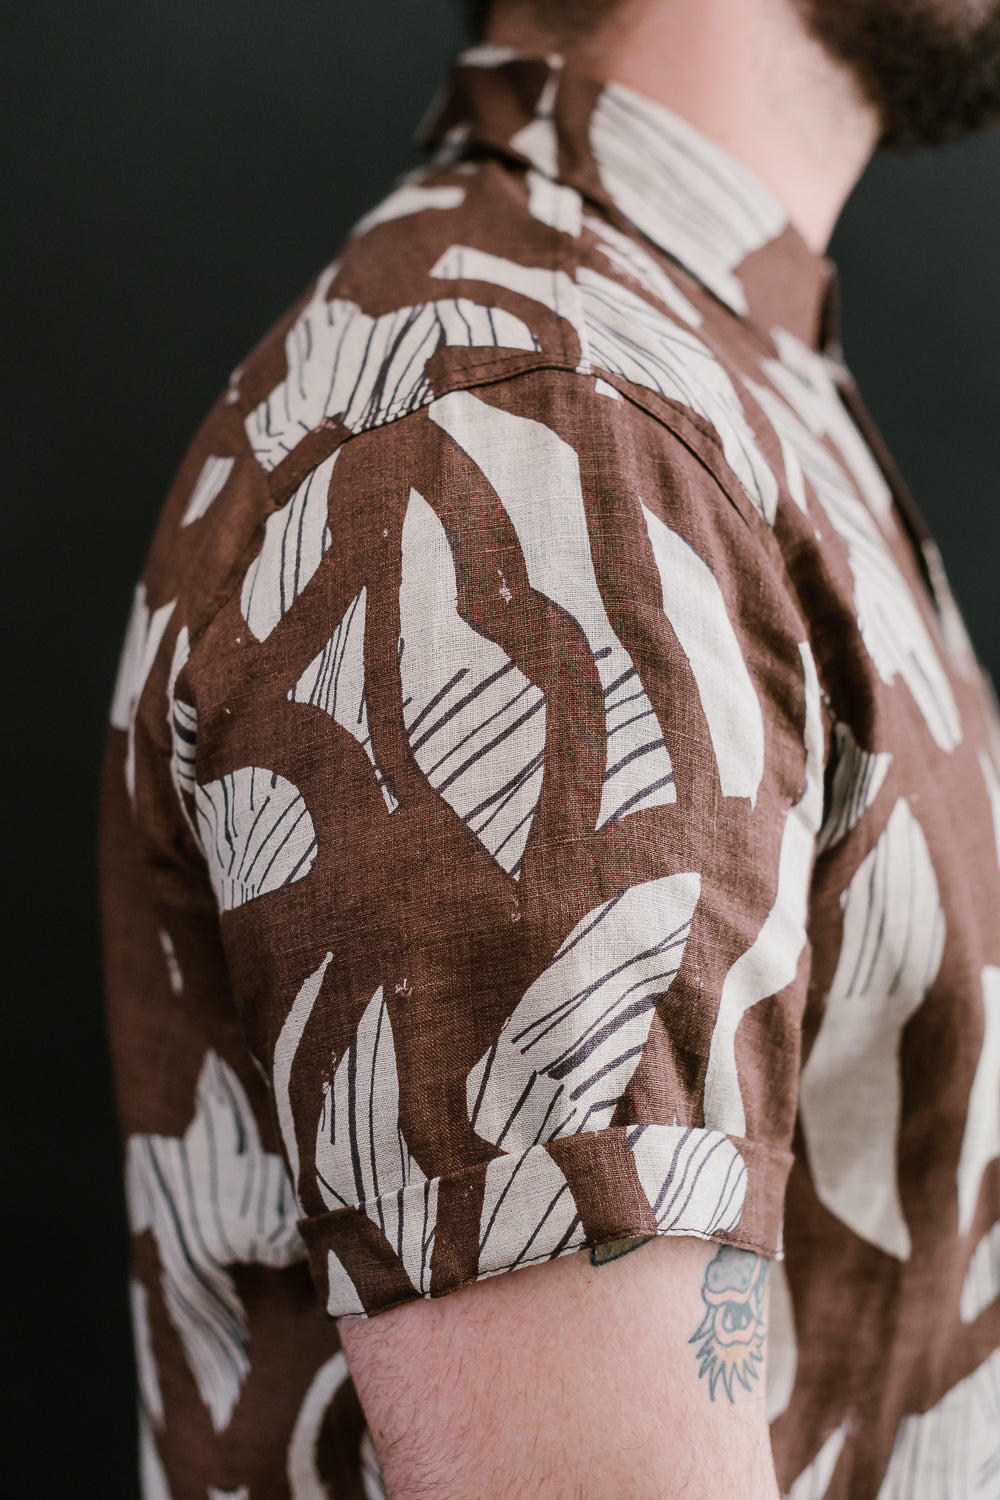 5oz Oxford Shirt Linen Shapes - Brown